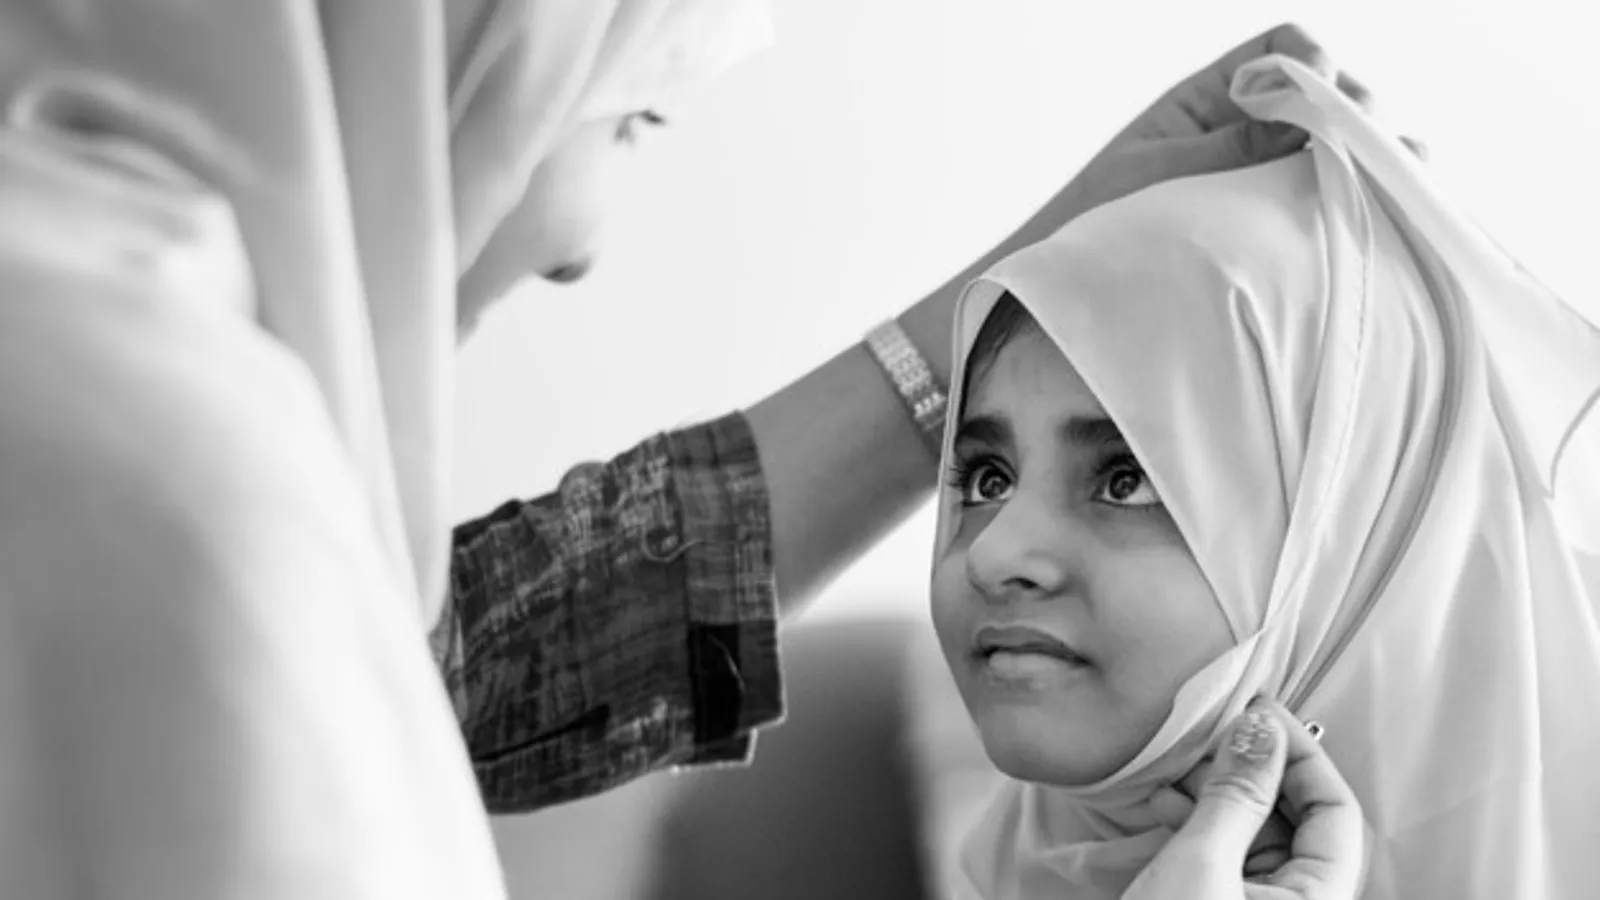 5 Arti Mimpi Teman Lepas Hijab, Menurut Primbon dan Pandangan Islam